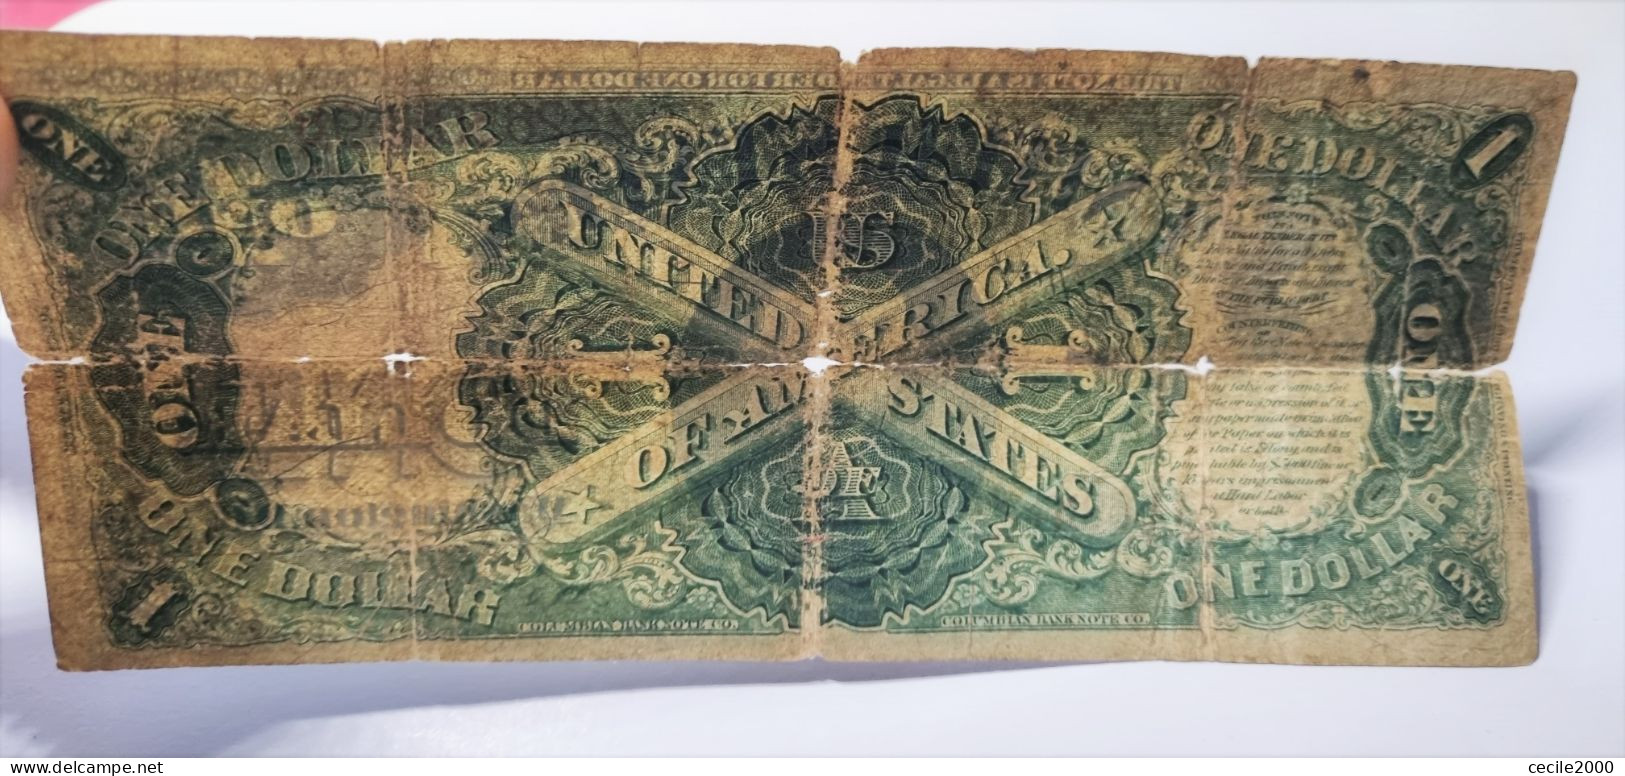 1880 USA $1 DOLLAR  *BROWN SEAL* UNITED STATES BANKNOTE  BILLETE ESTADOS UNIDOS COMPRAS MULTIPLES CONSULTAR - Billets Des États-Unis (1862-1923)